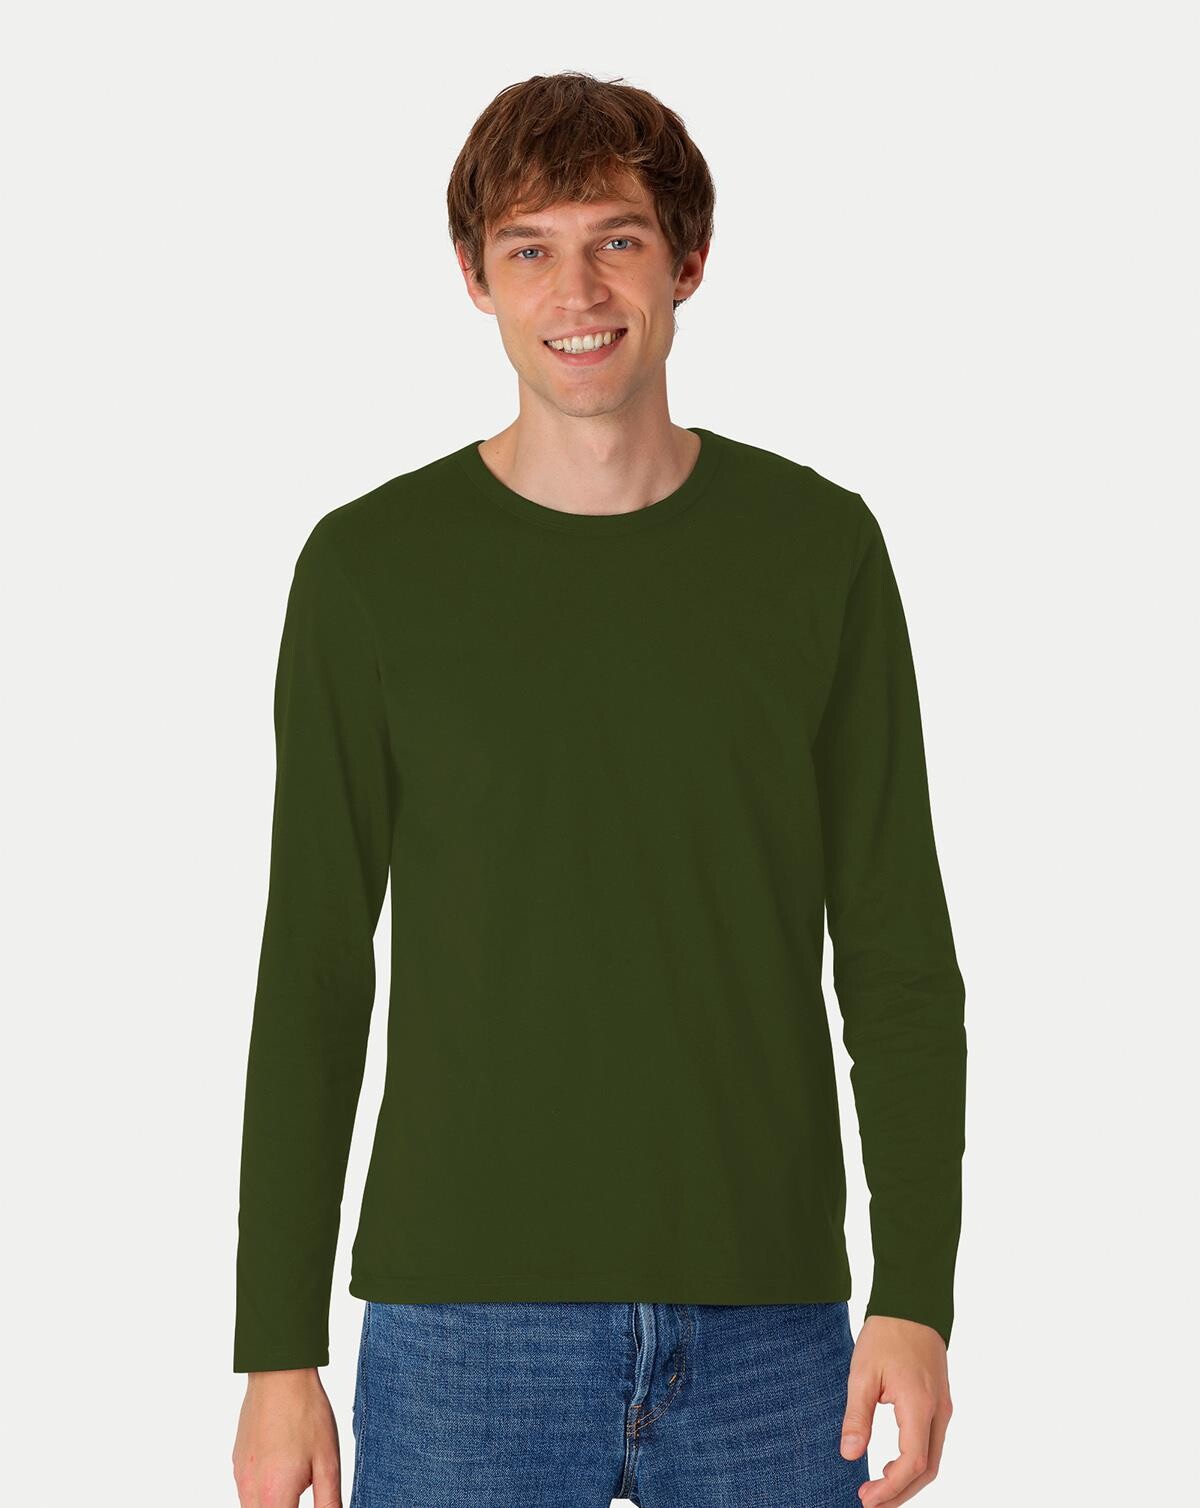 Neutral Organic - Mens Long Sleeve T-shirt (Oliven, S)